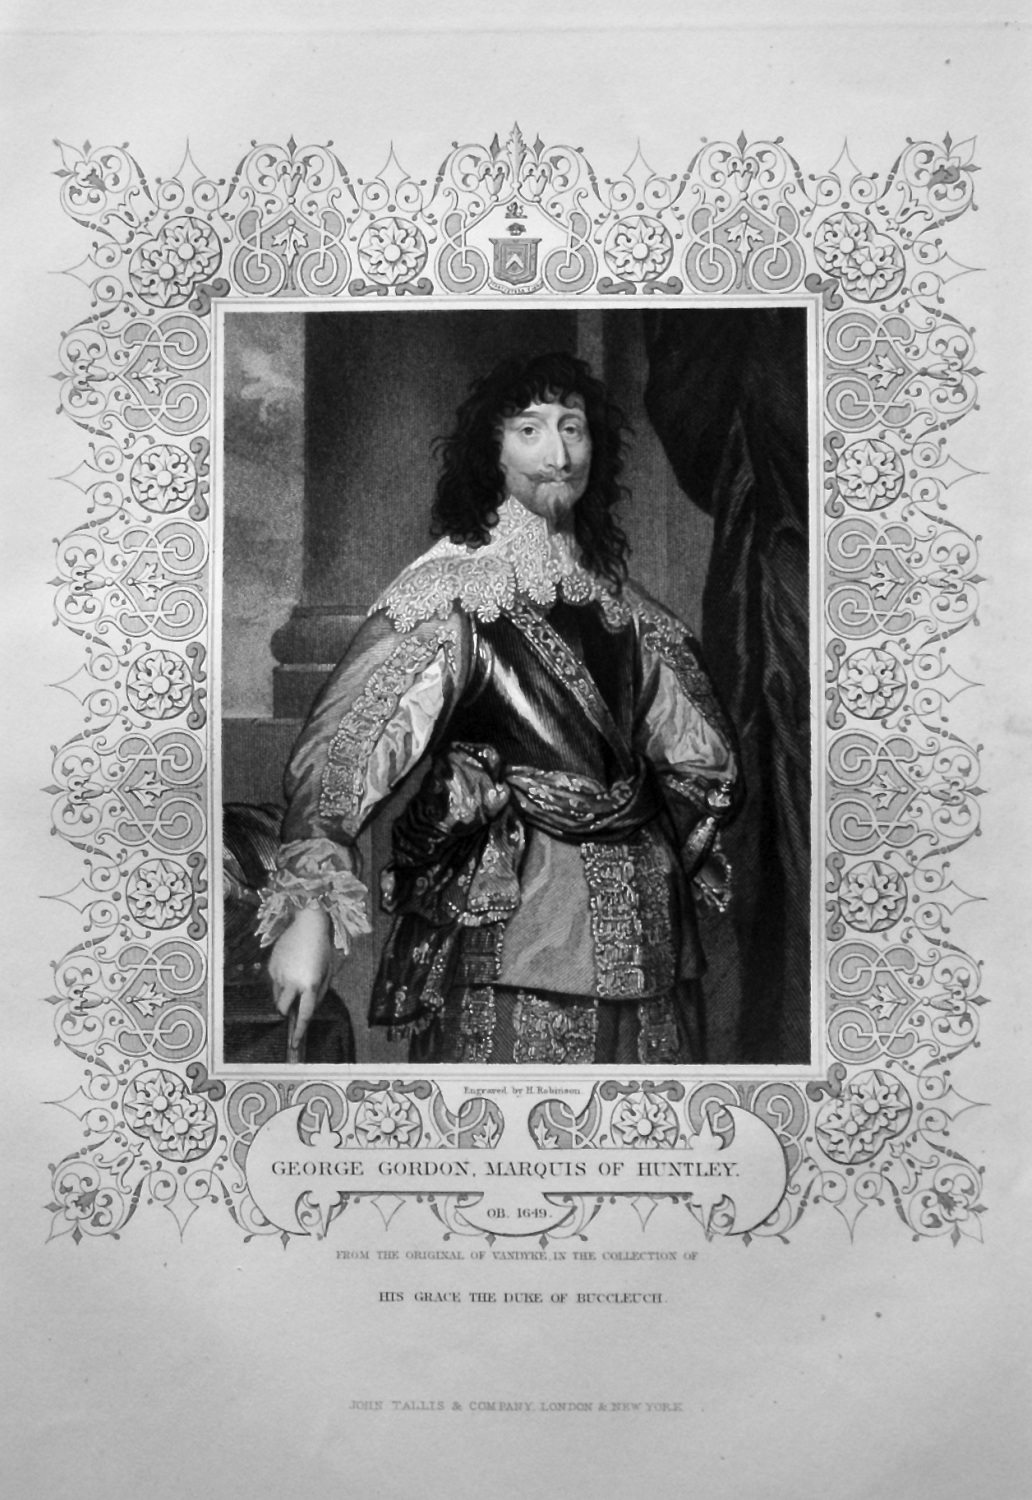 George Gordon, Marquis of Huntley.  OB. 1649.  From the original of Vandyke